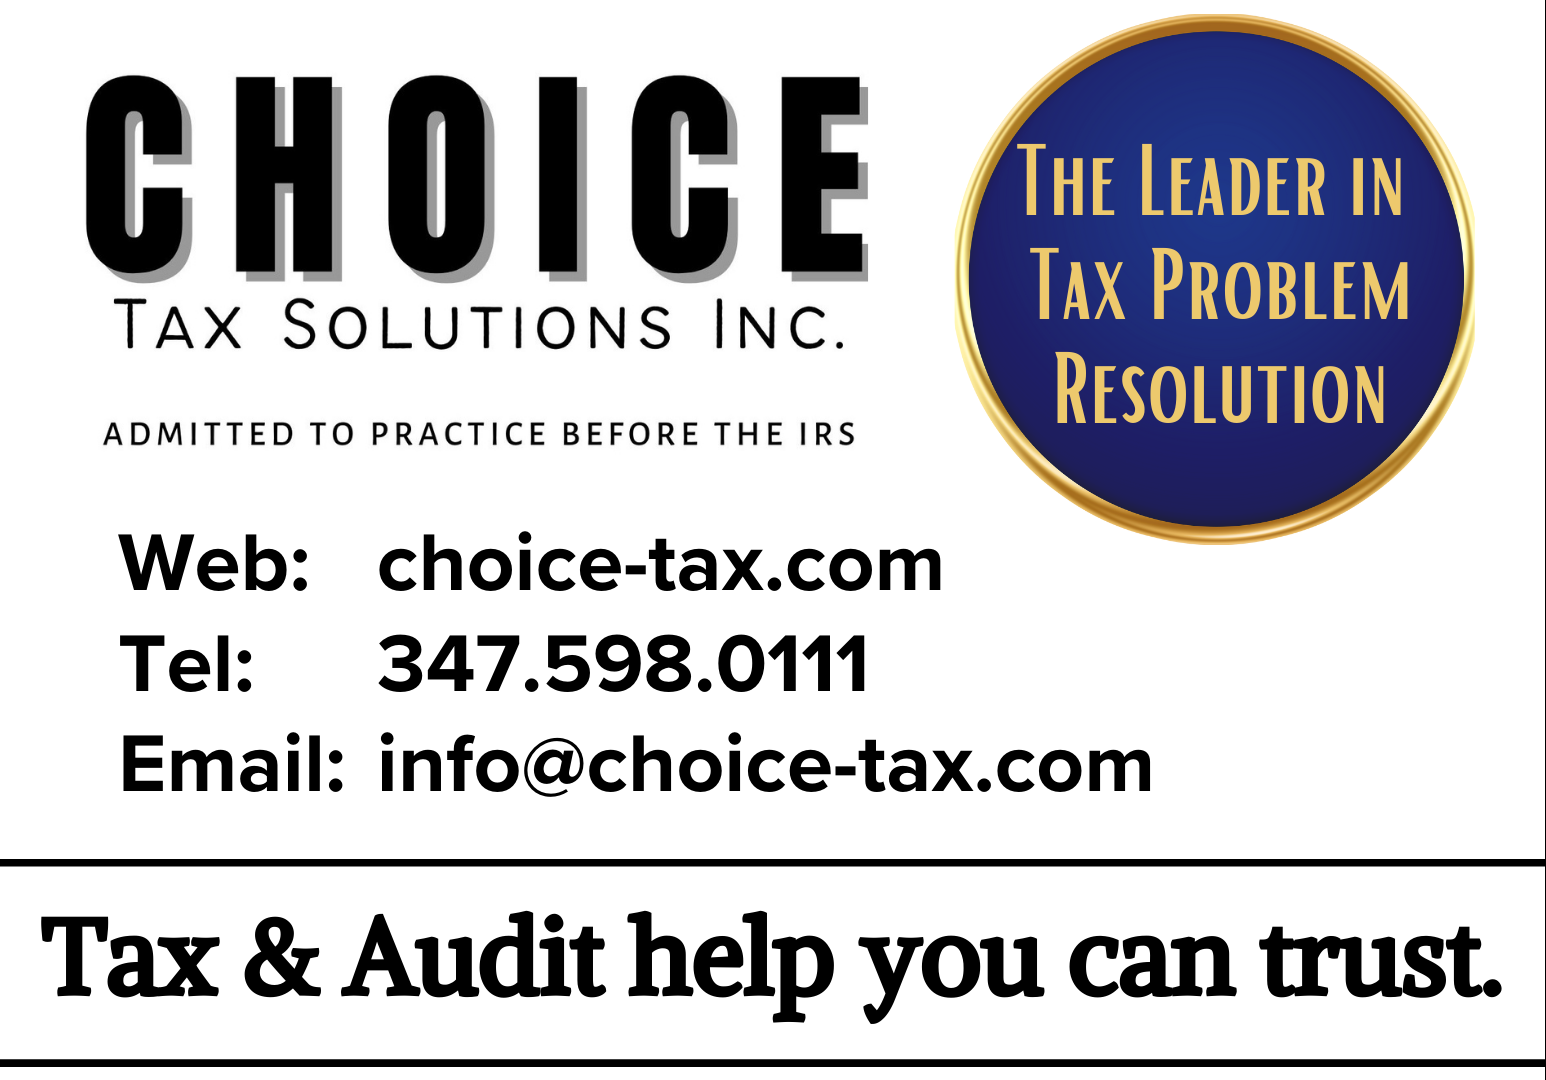 Choice Tax Solutions Inc.